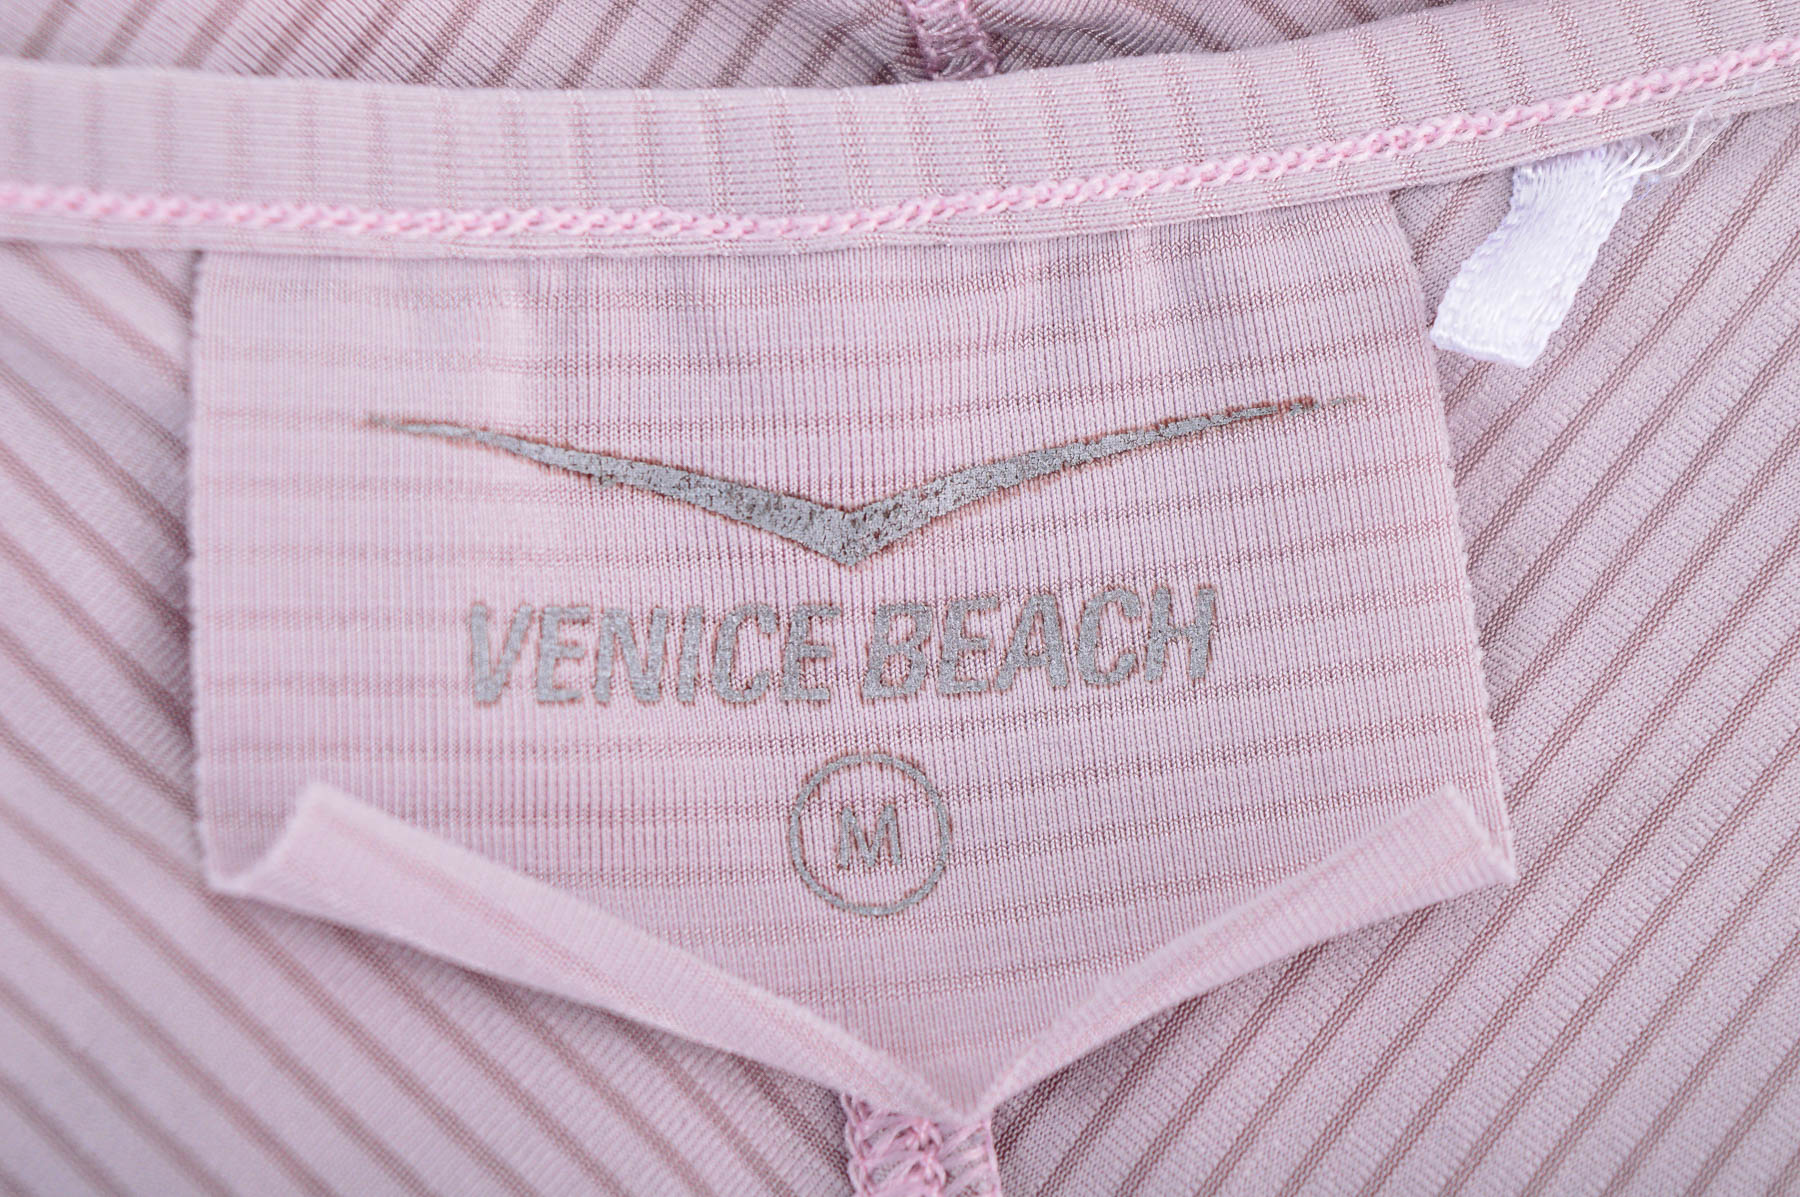 Women's top - Venice Beach - 2